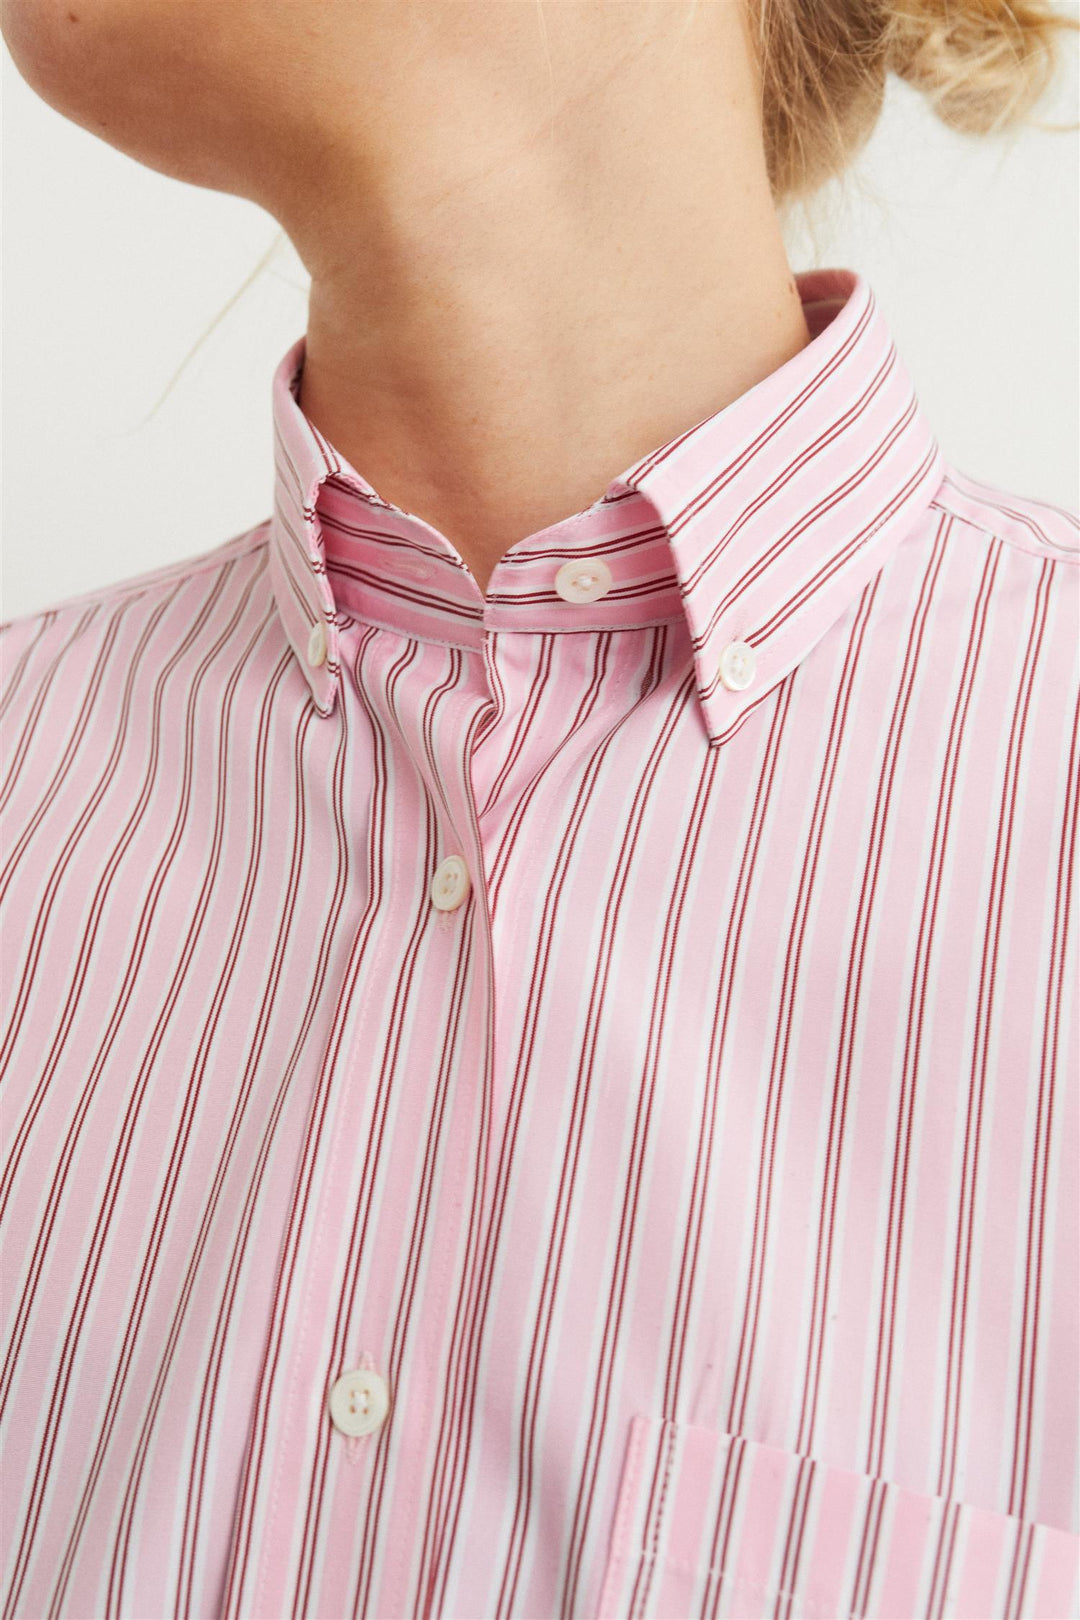 William Shirt Berry Stripe